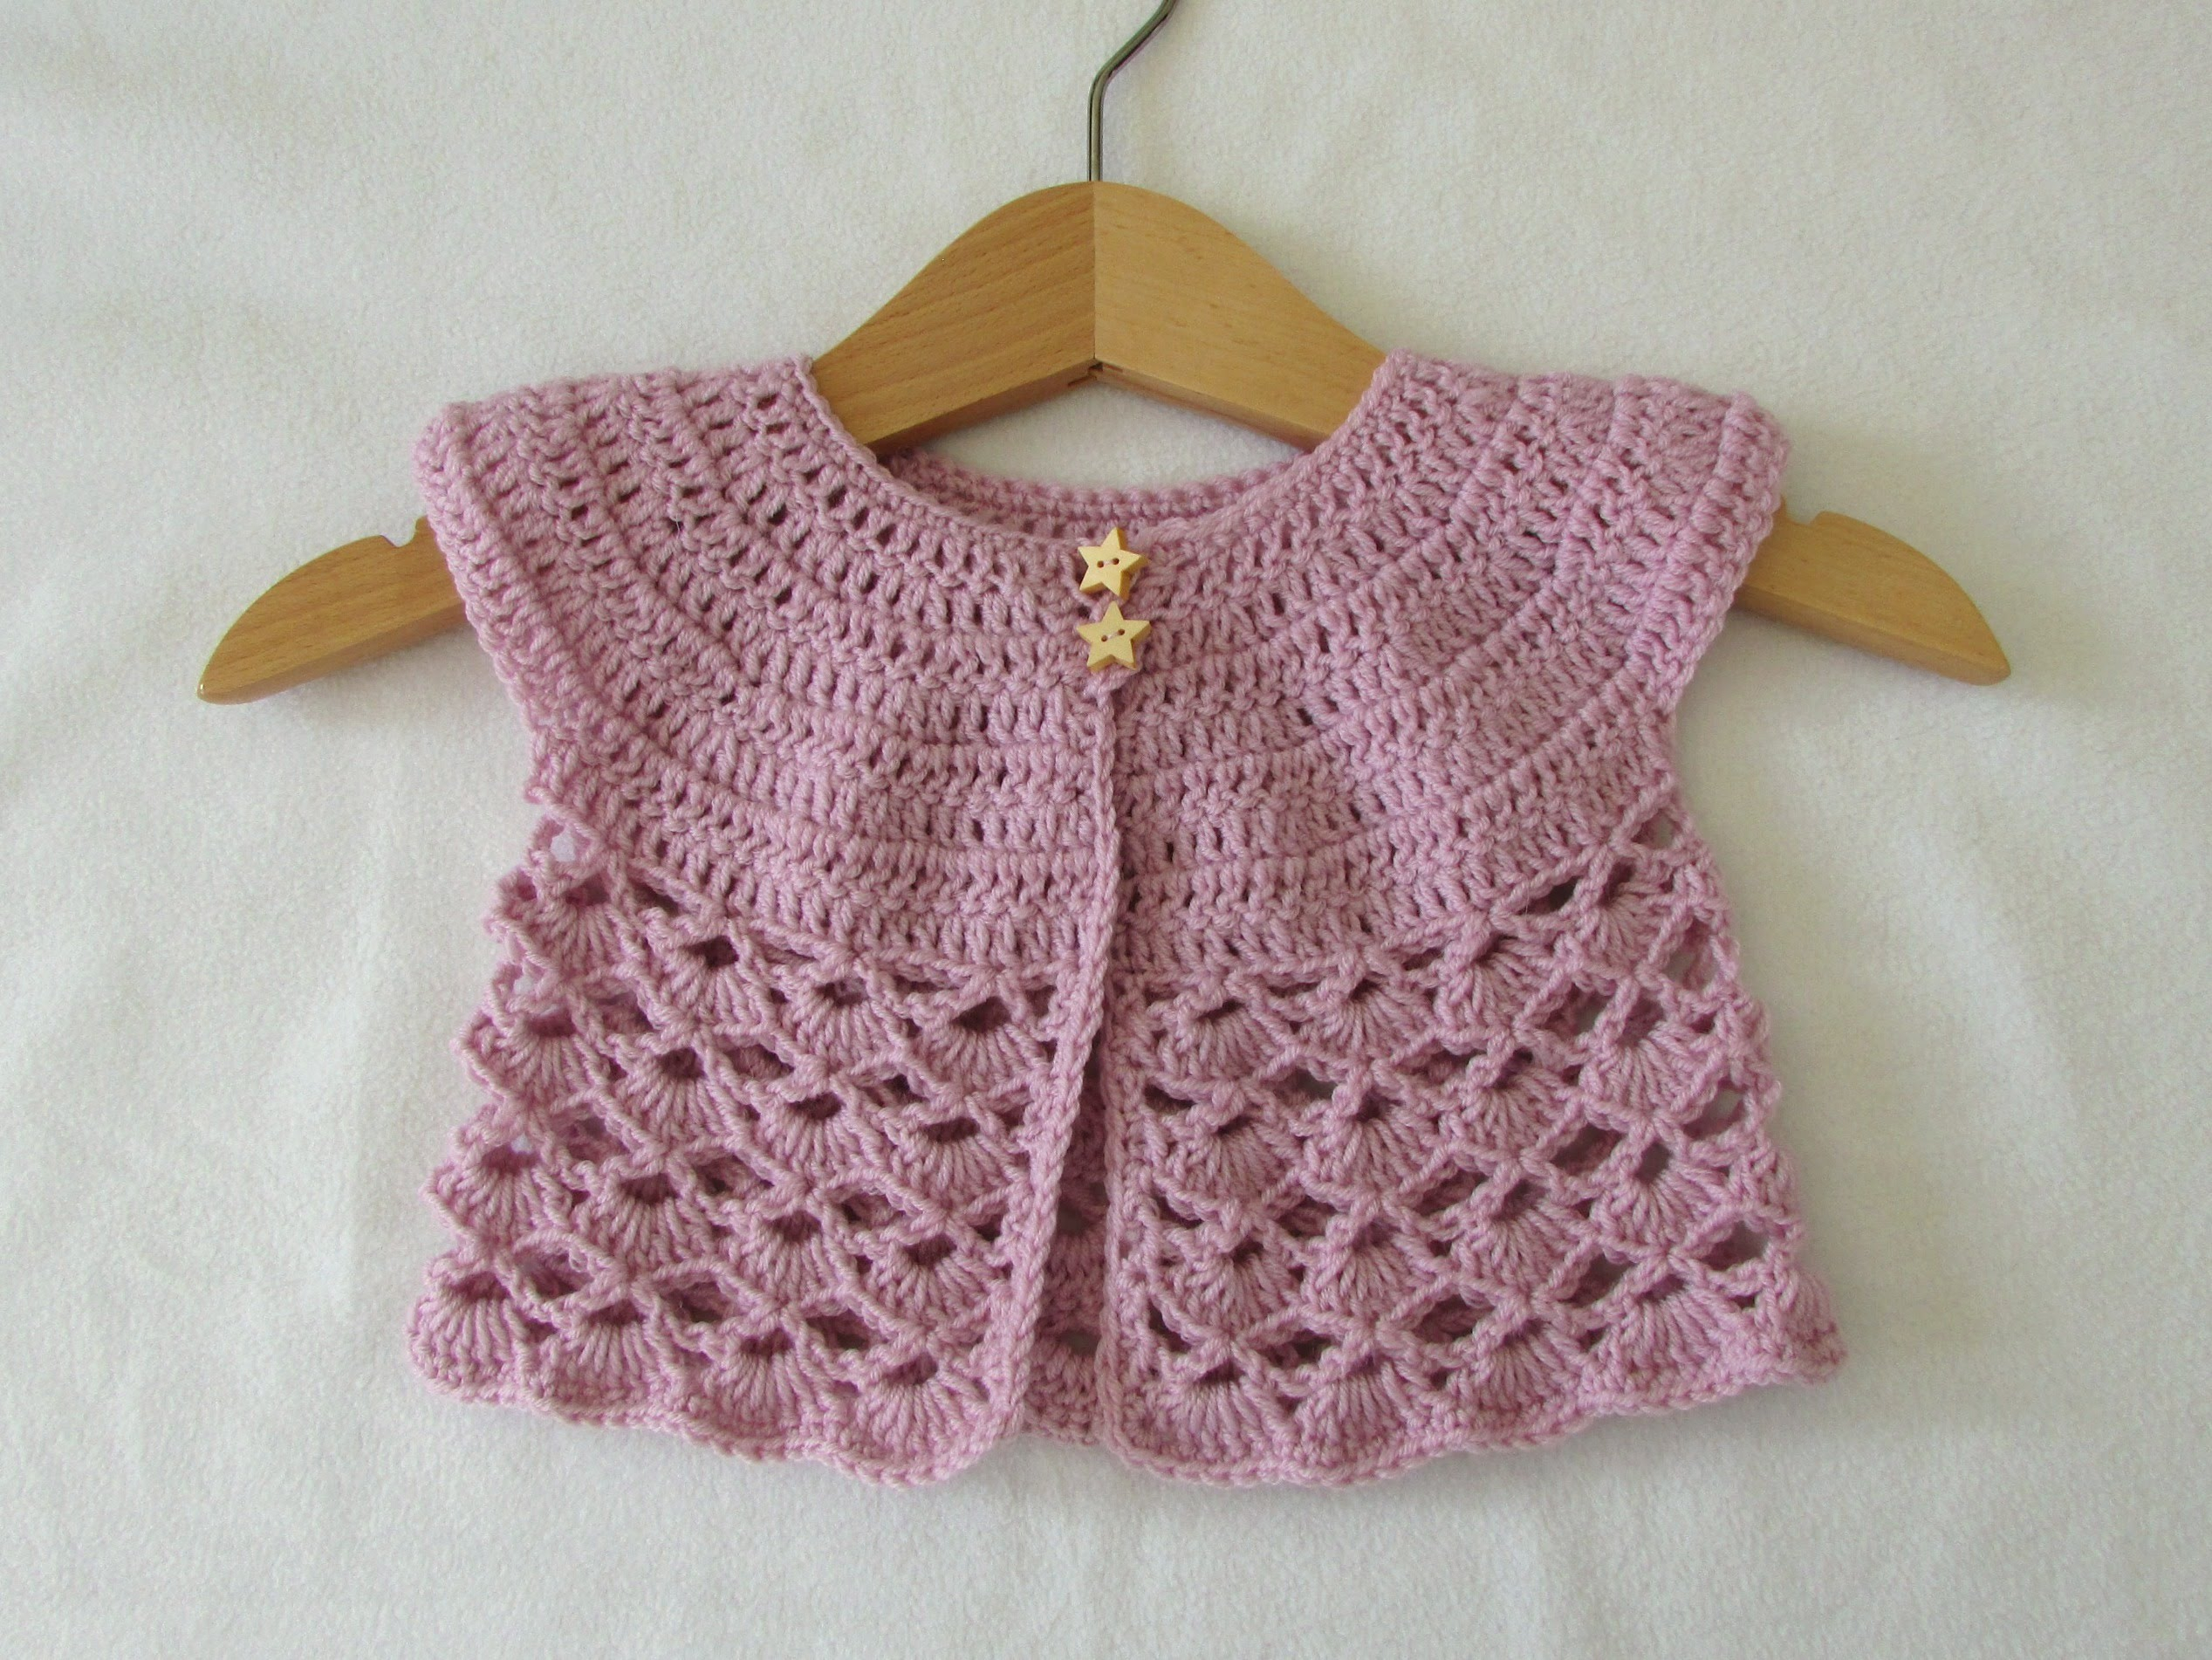 Crochet Newborn Sweater Pattern How To Crochet Ba Sweater Crochet And Knitting Patterns 2019